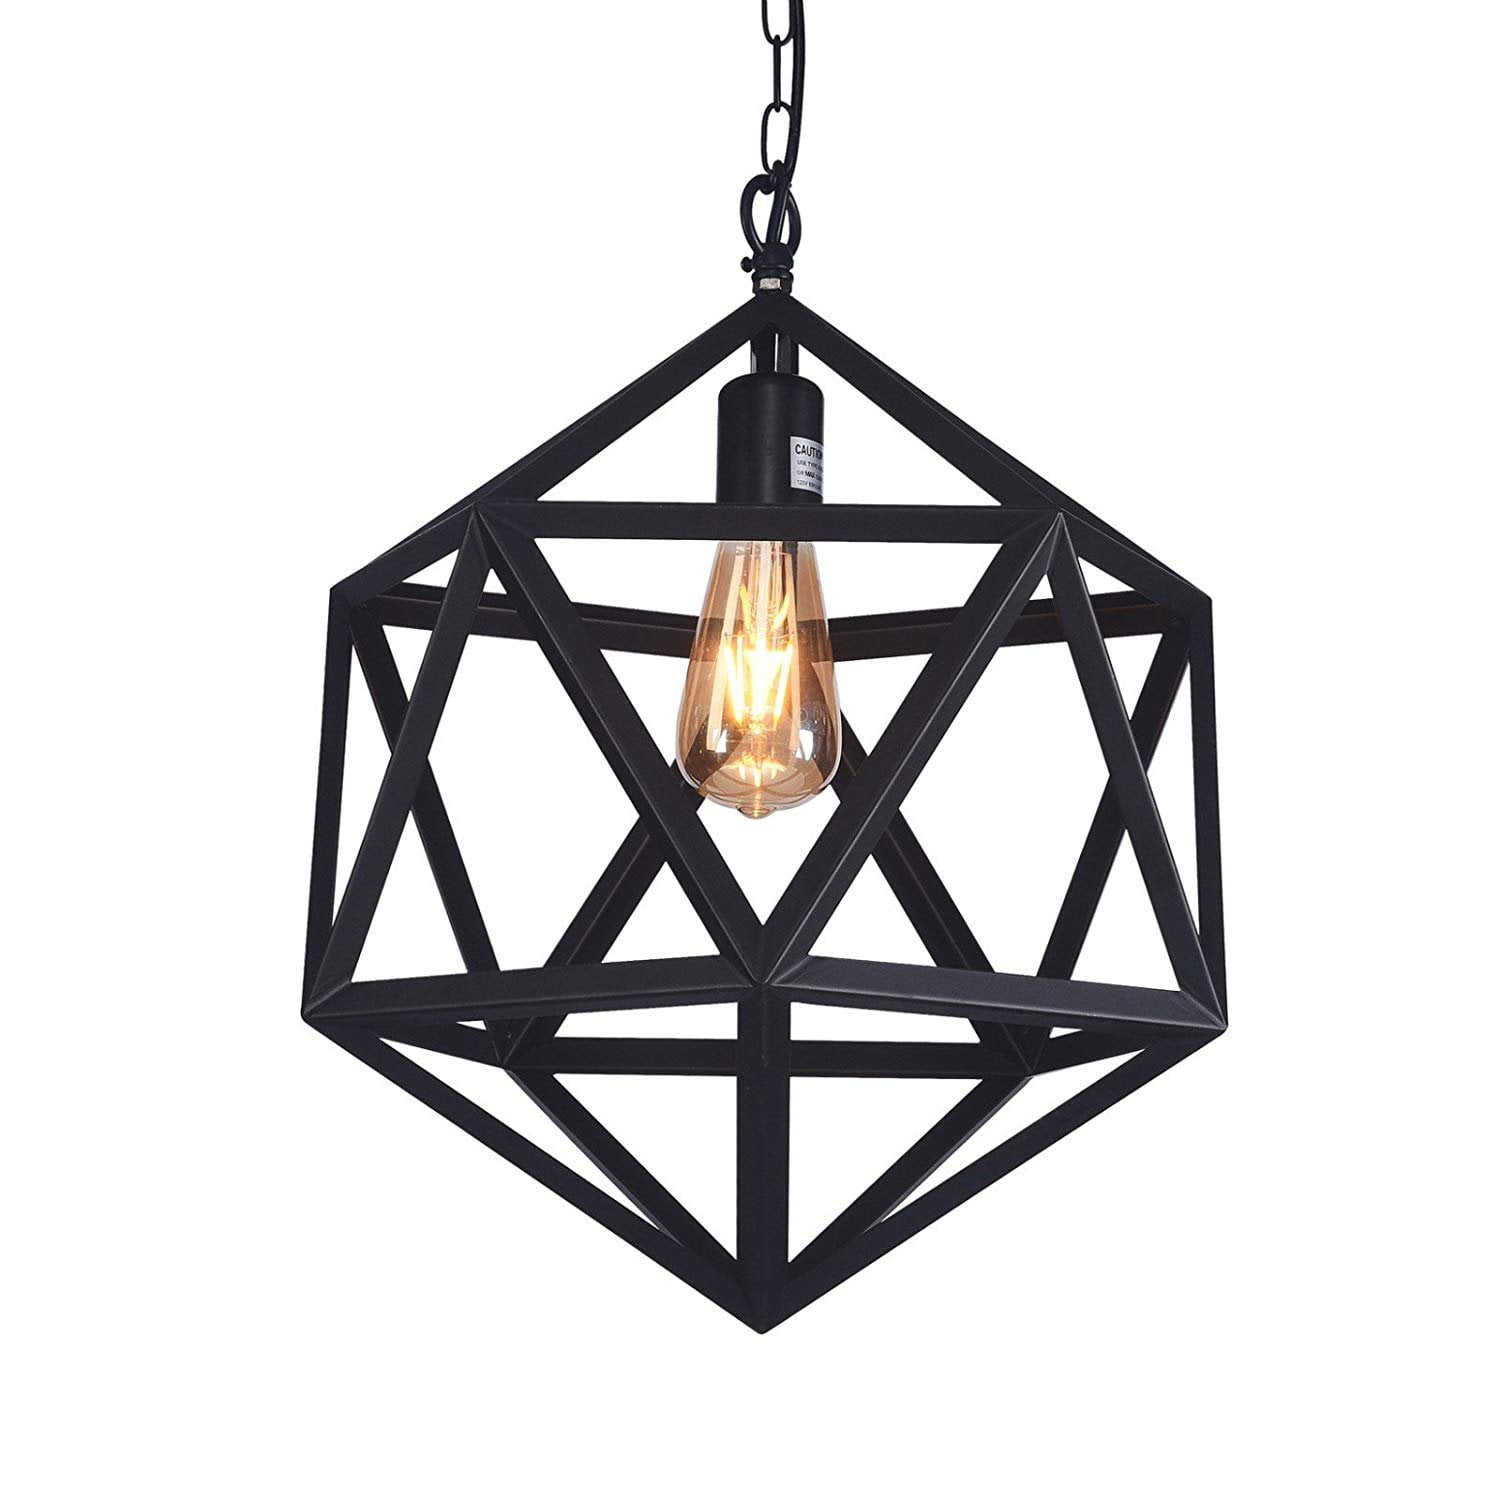 Retro Industrial Geometric Pendant Lamp Vintage Ceiling Light Bulb Iron Cage 